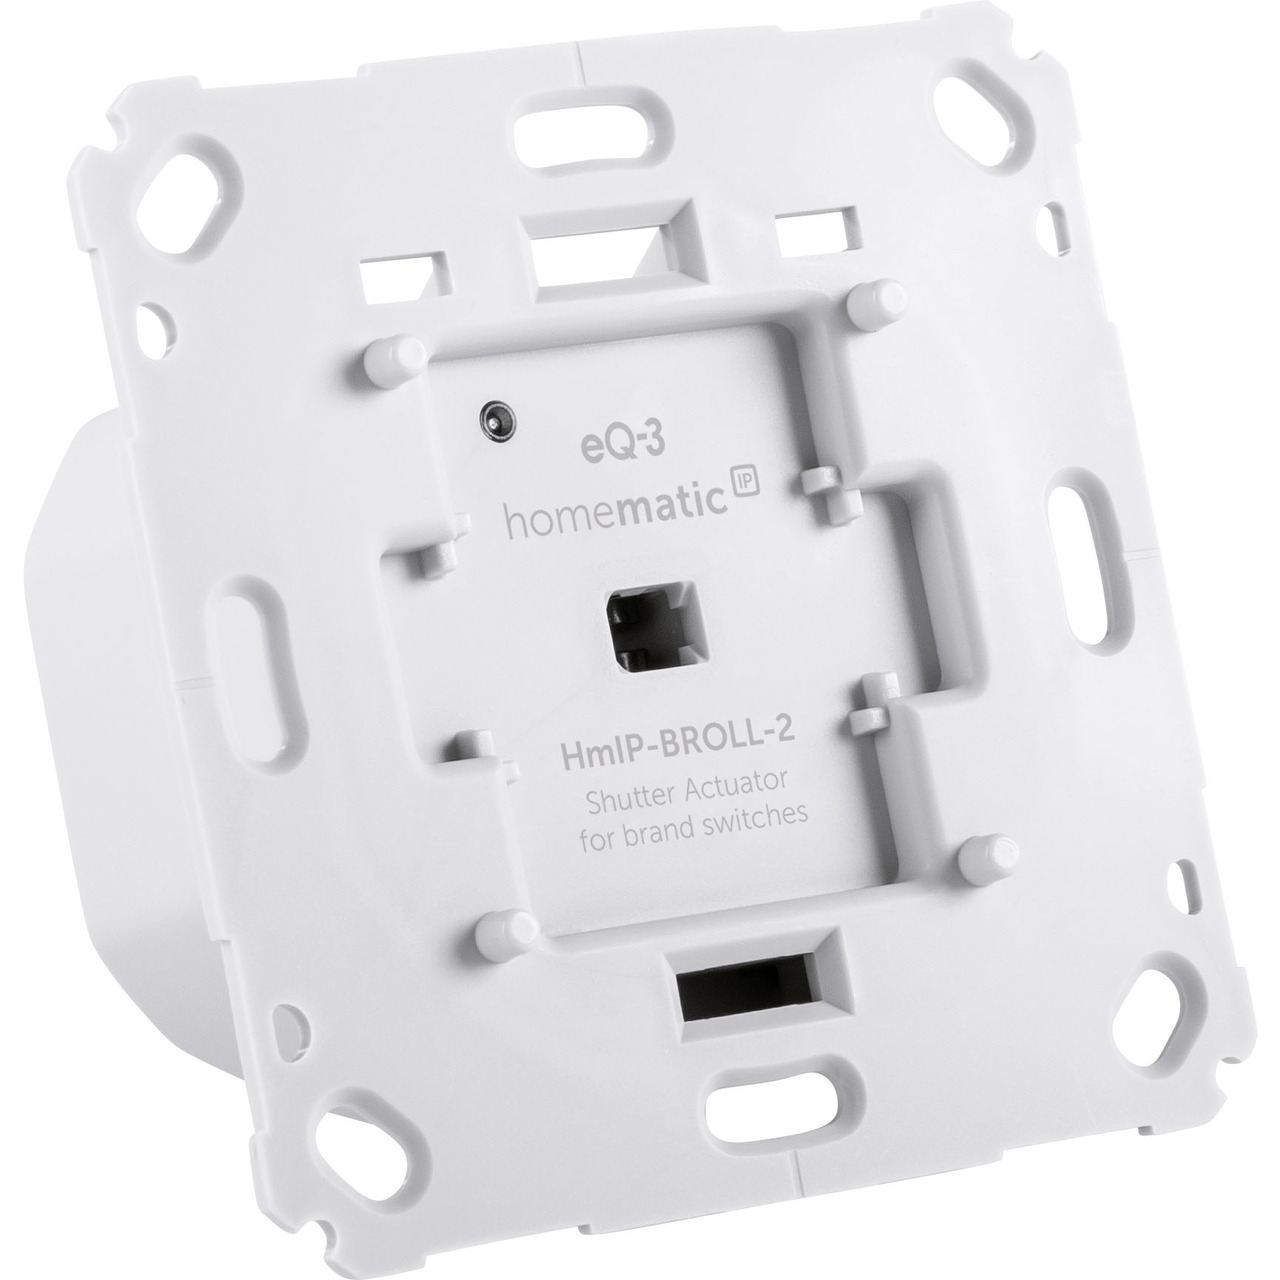 Homematic IP Smart Home Rollladenaktor HmIP-BROLL-2 fr Markenschalter- auch fr Markisen geeignet unter Hausautomation